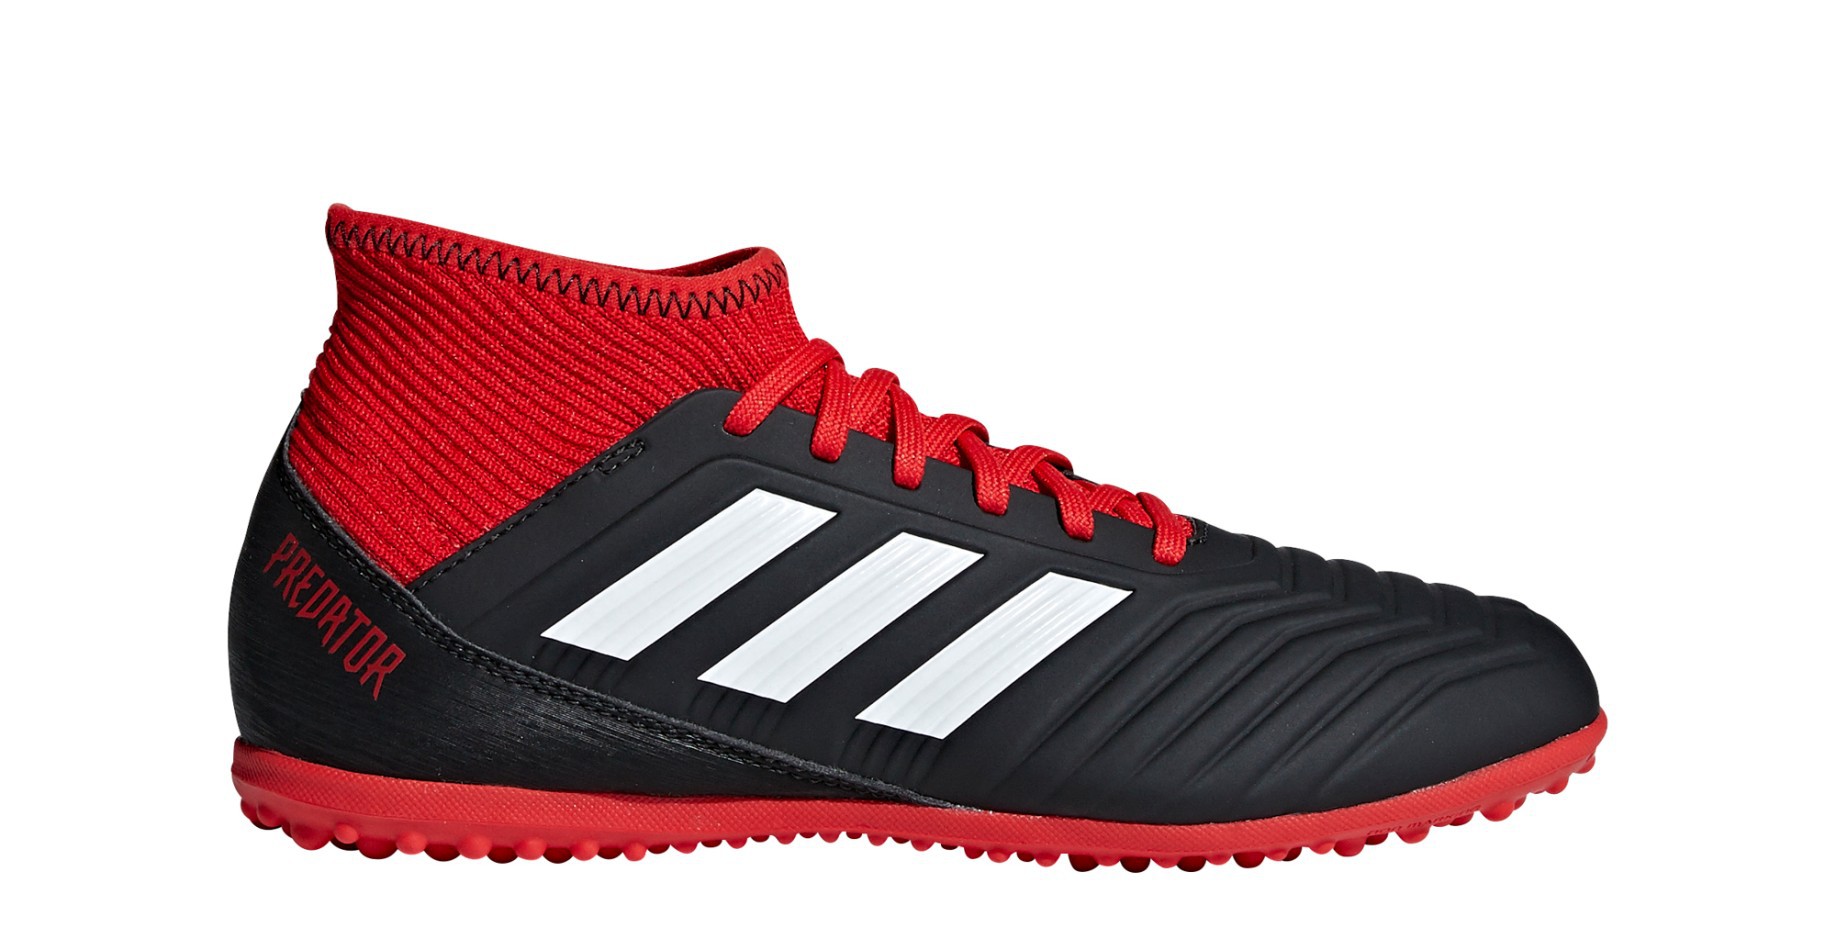 Zapatos de Fútbol Adidas Predator Tango 18.3 TF Equipo de Modo de Pack colore rojo negro - SportIT.com